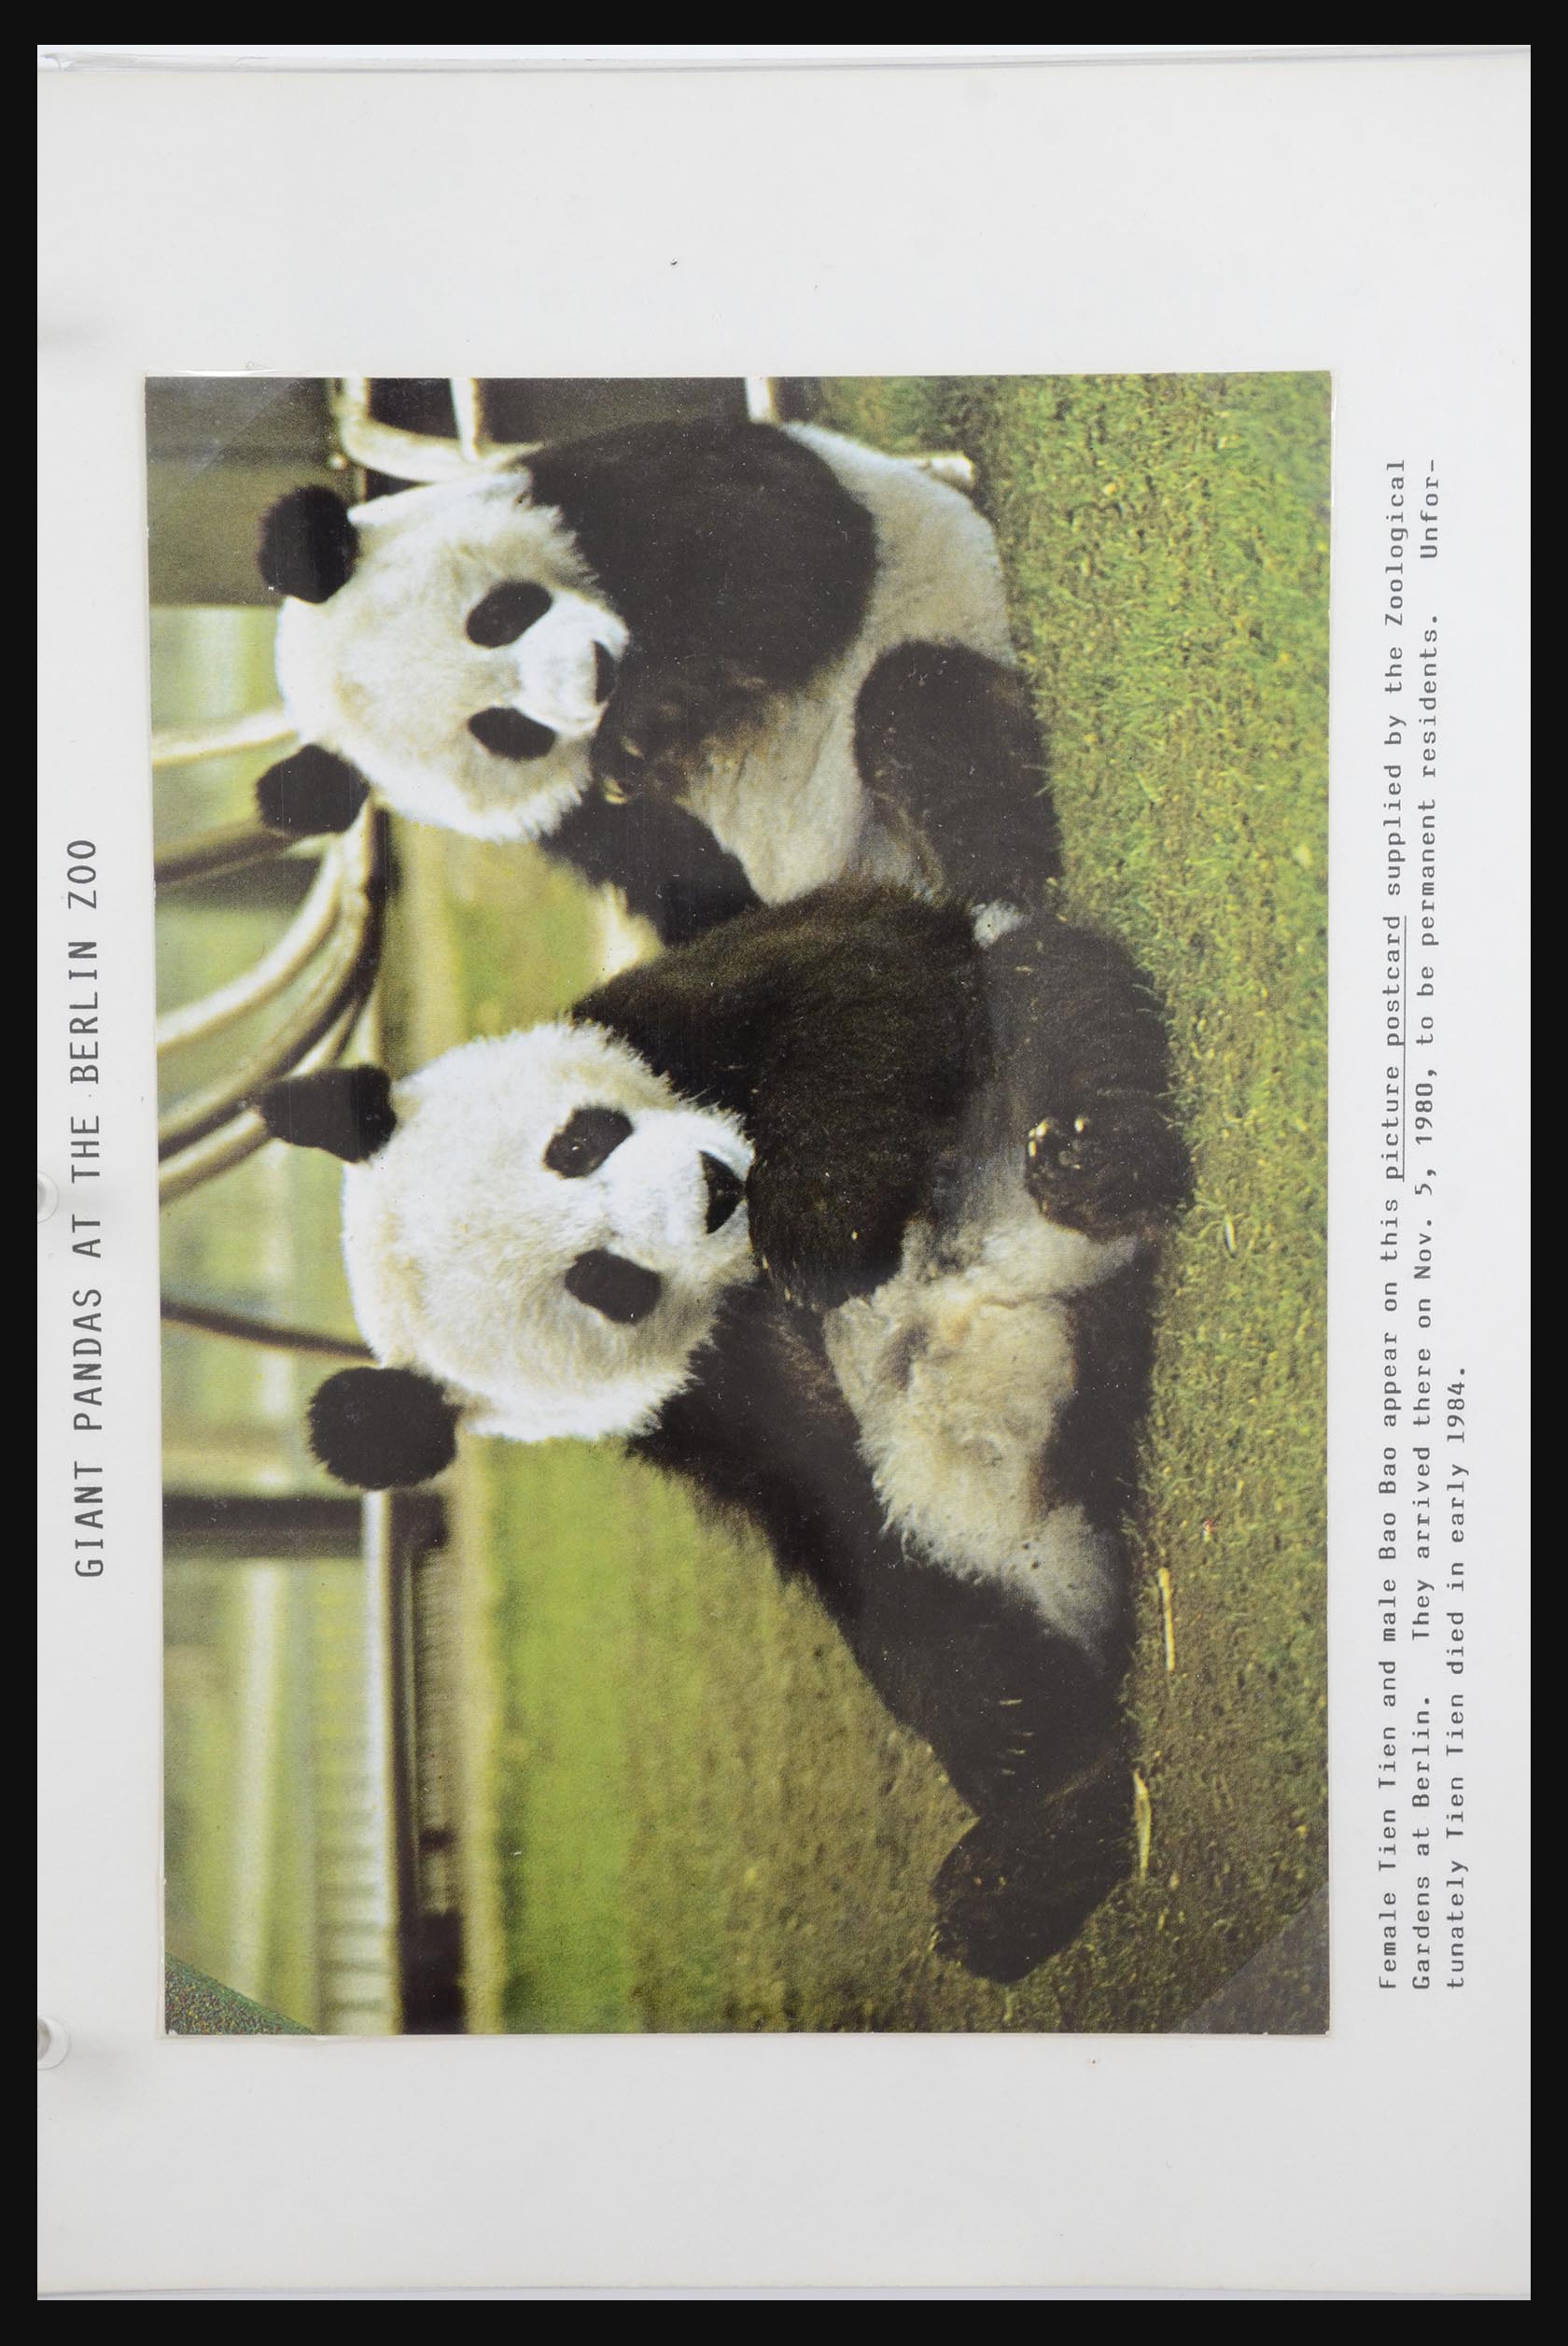 31922 032 - 31922 Thematic giant panda's 1937-1989.